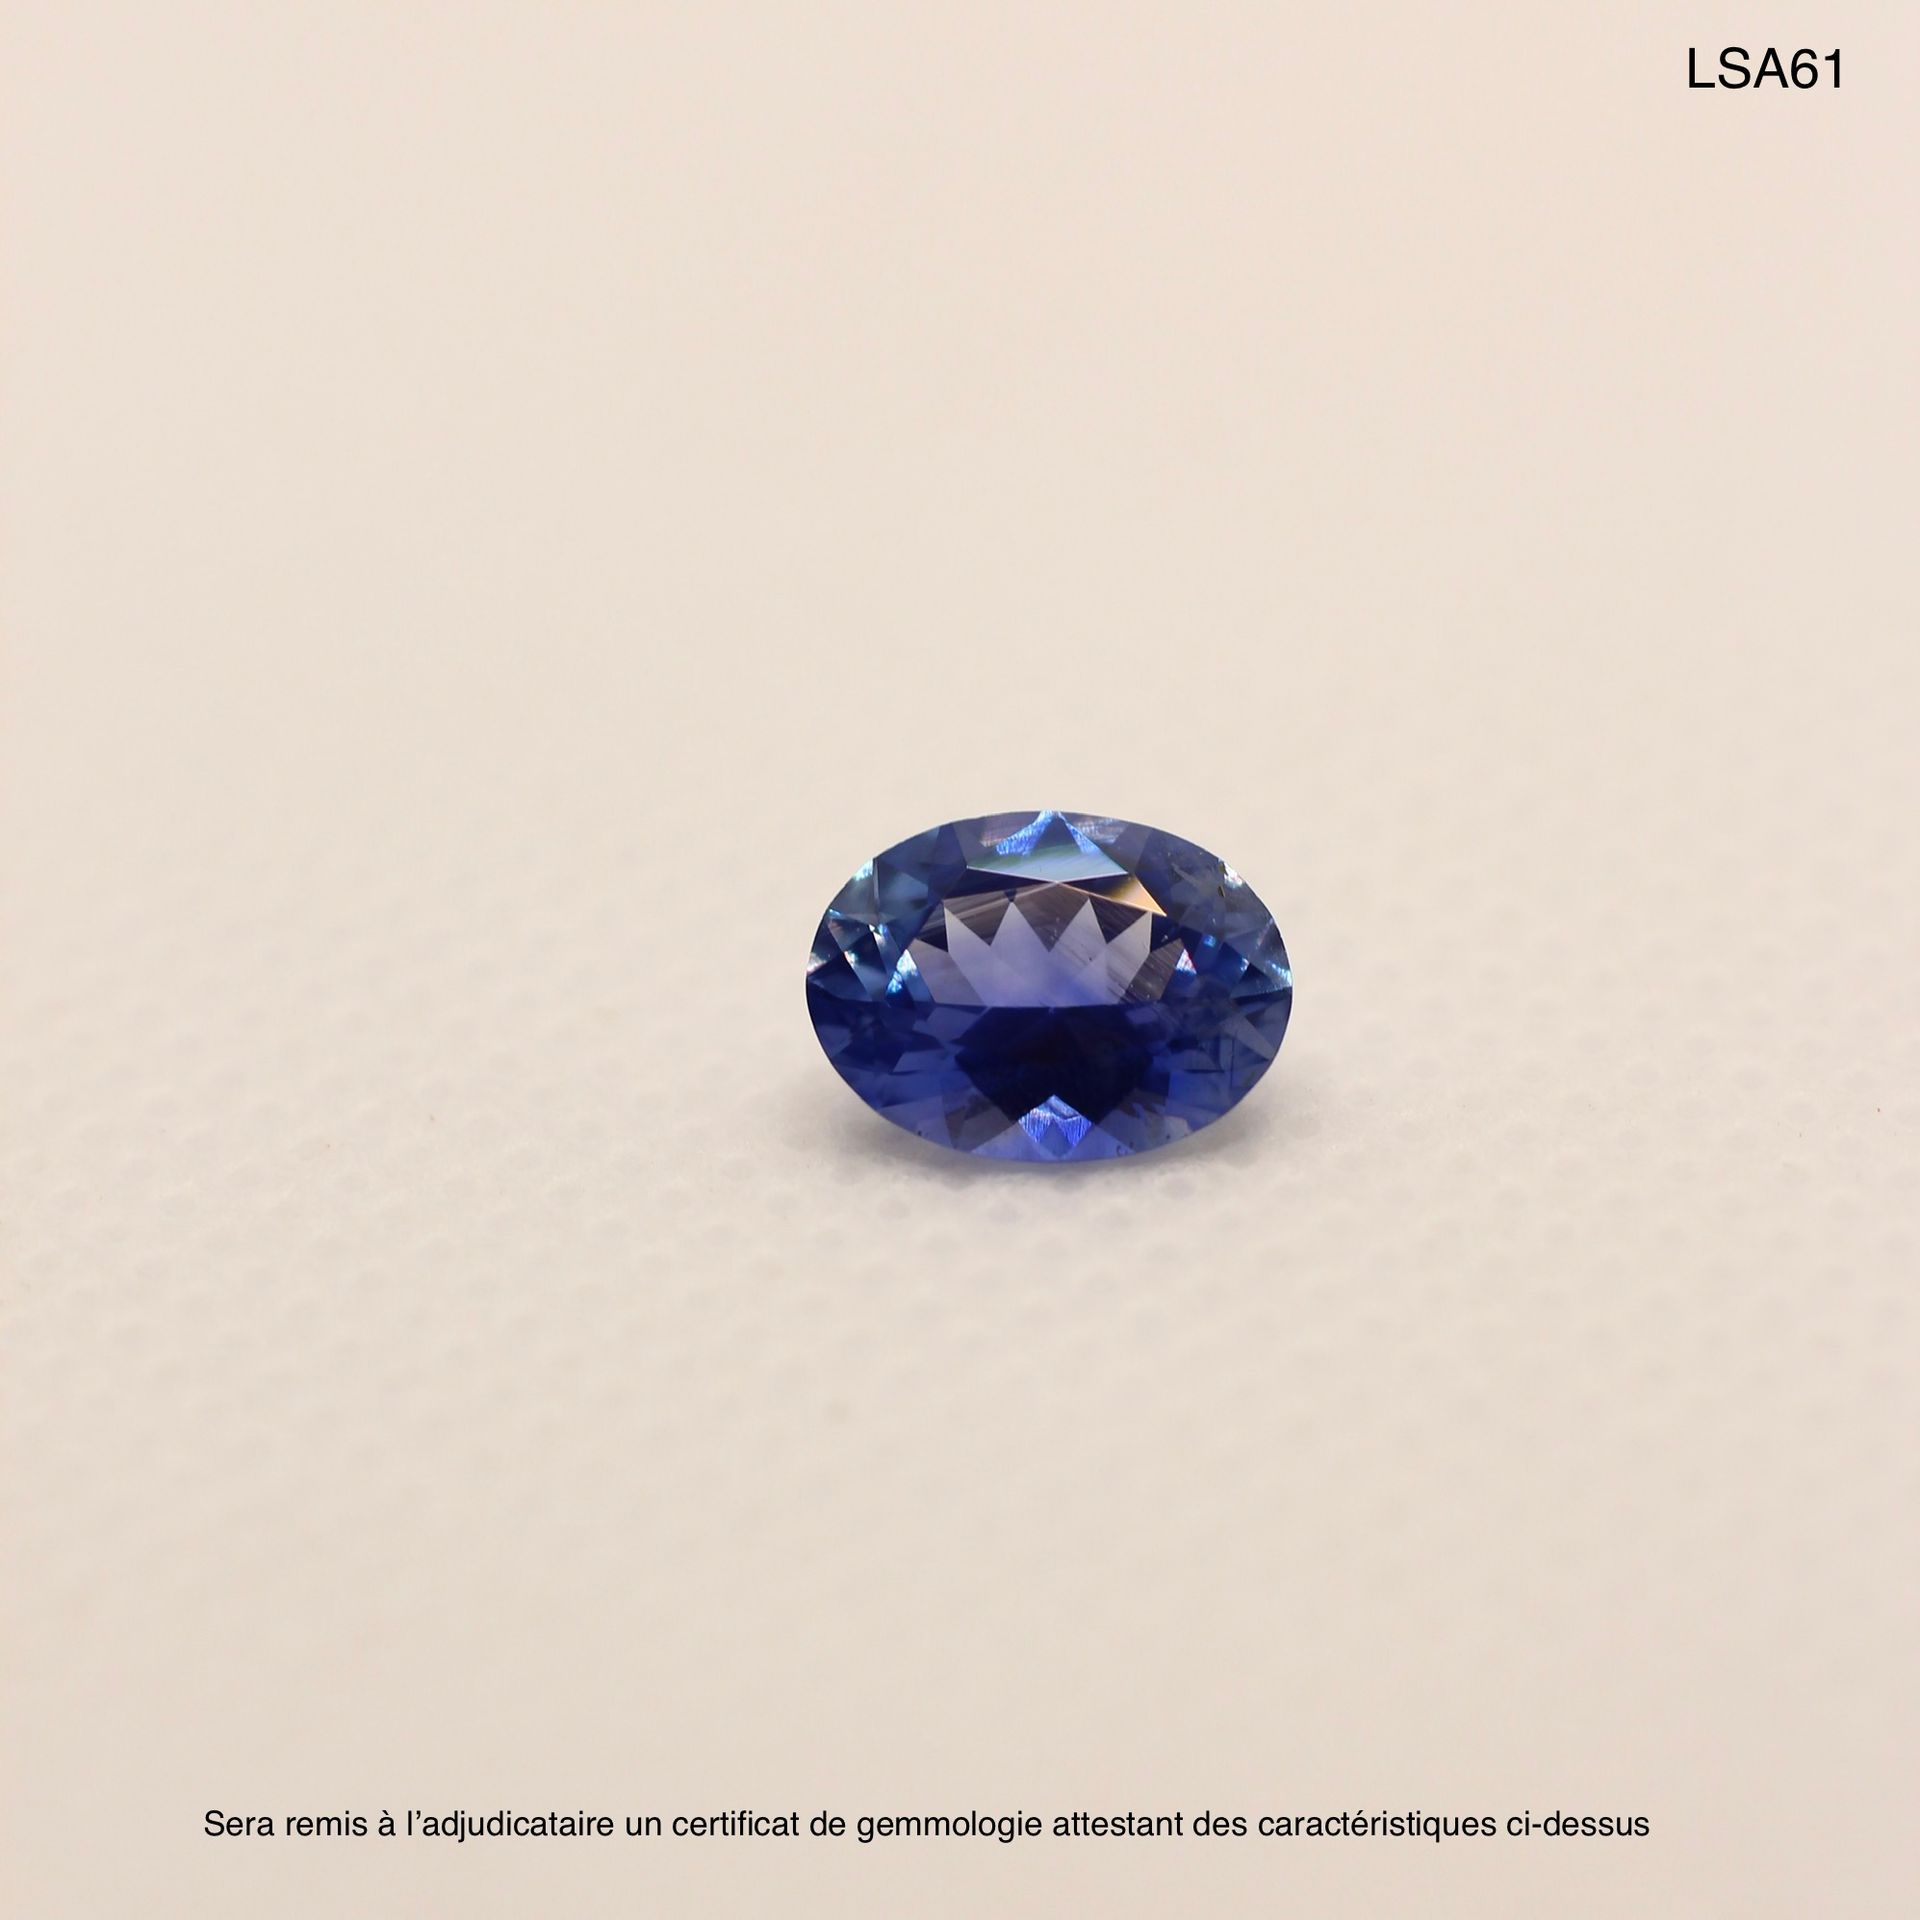 SAPHIRS TAILLÉS 拍品编号：LSA61

原产地: 马达加斯加

治疗: Ø

颜色：蓝色

形状: 椭圆形

尺寸：8.9mm x 6.8mm &hellip;